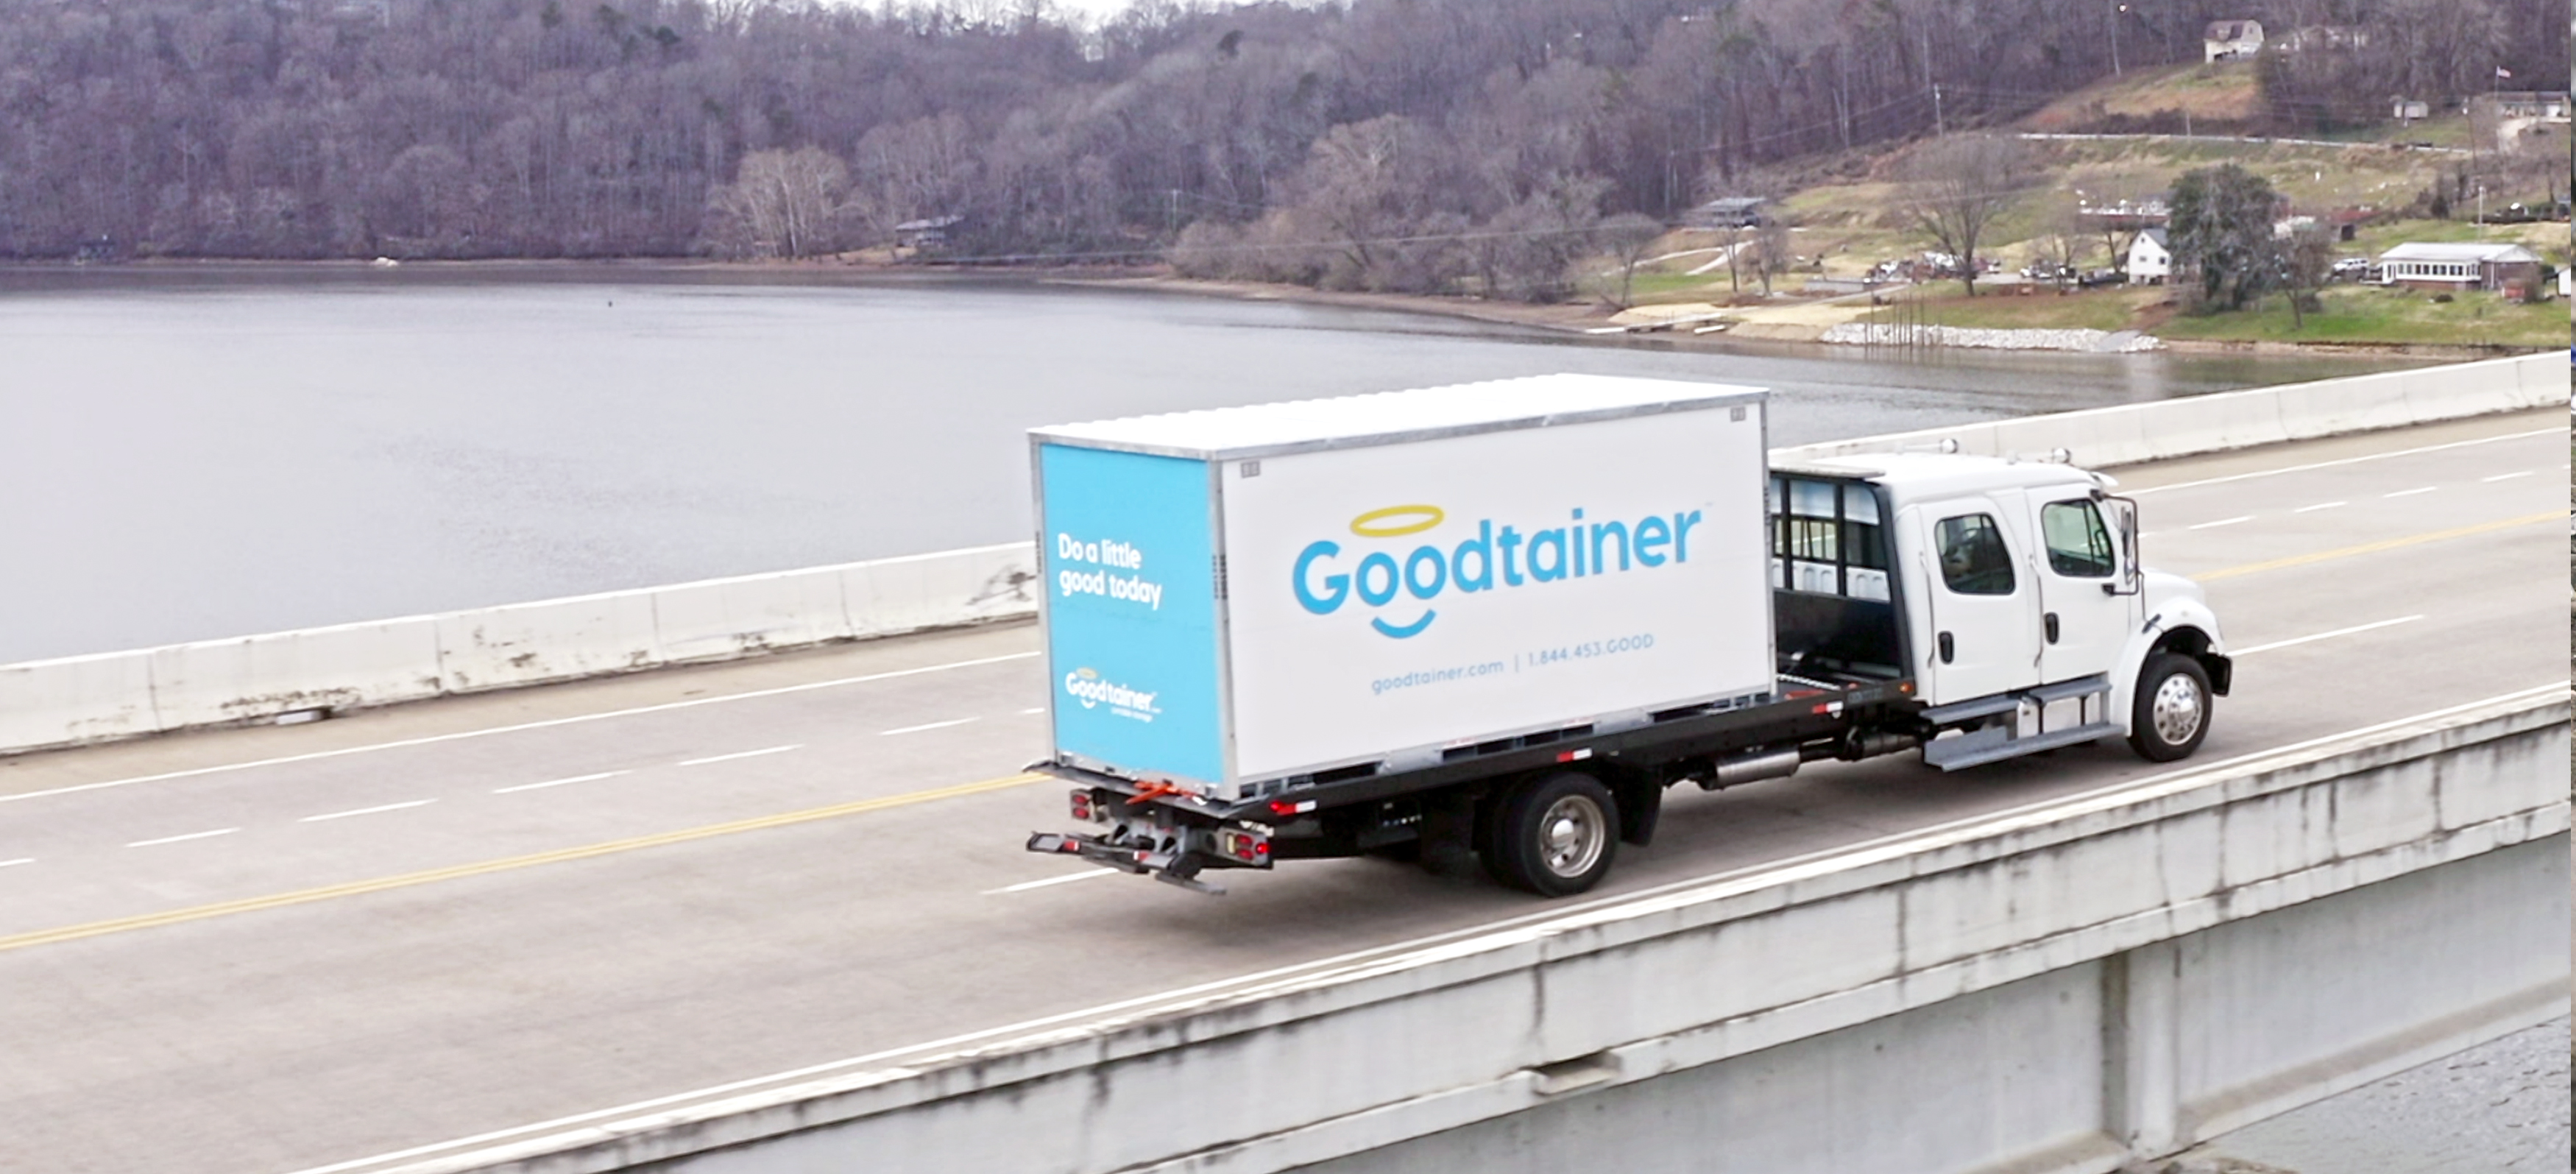 goodtainer-delivery-bridge-banner-2.jpg